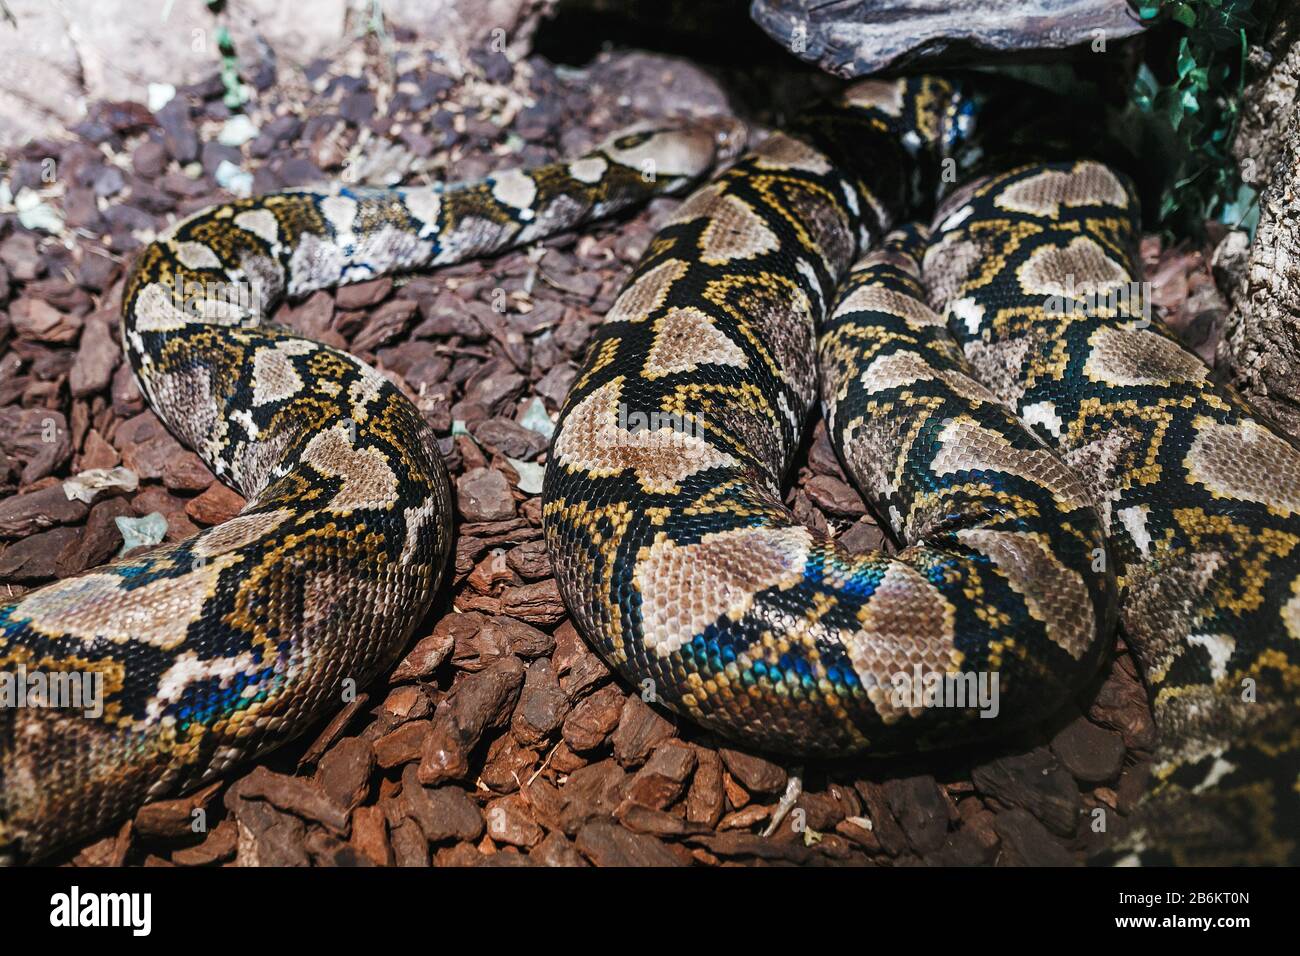 Python in Zoo terrarium Stock Photo